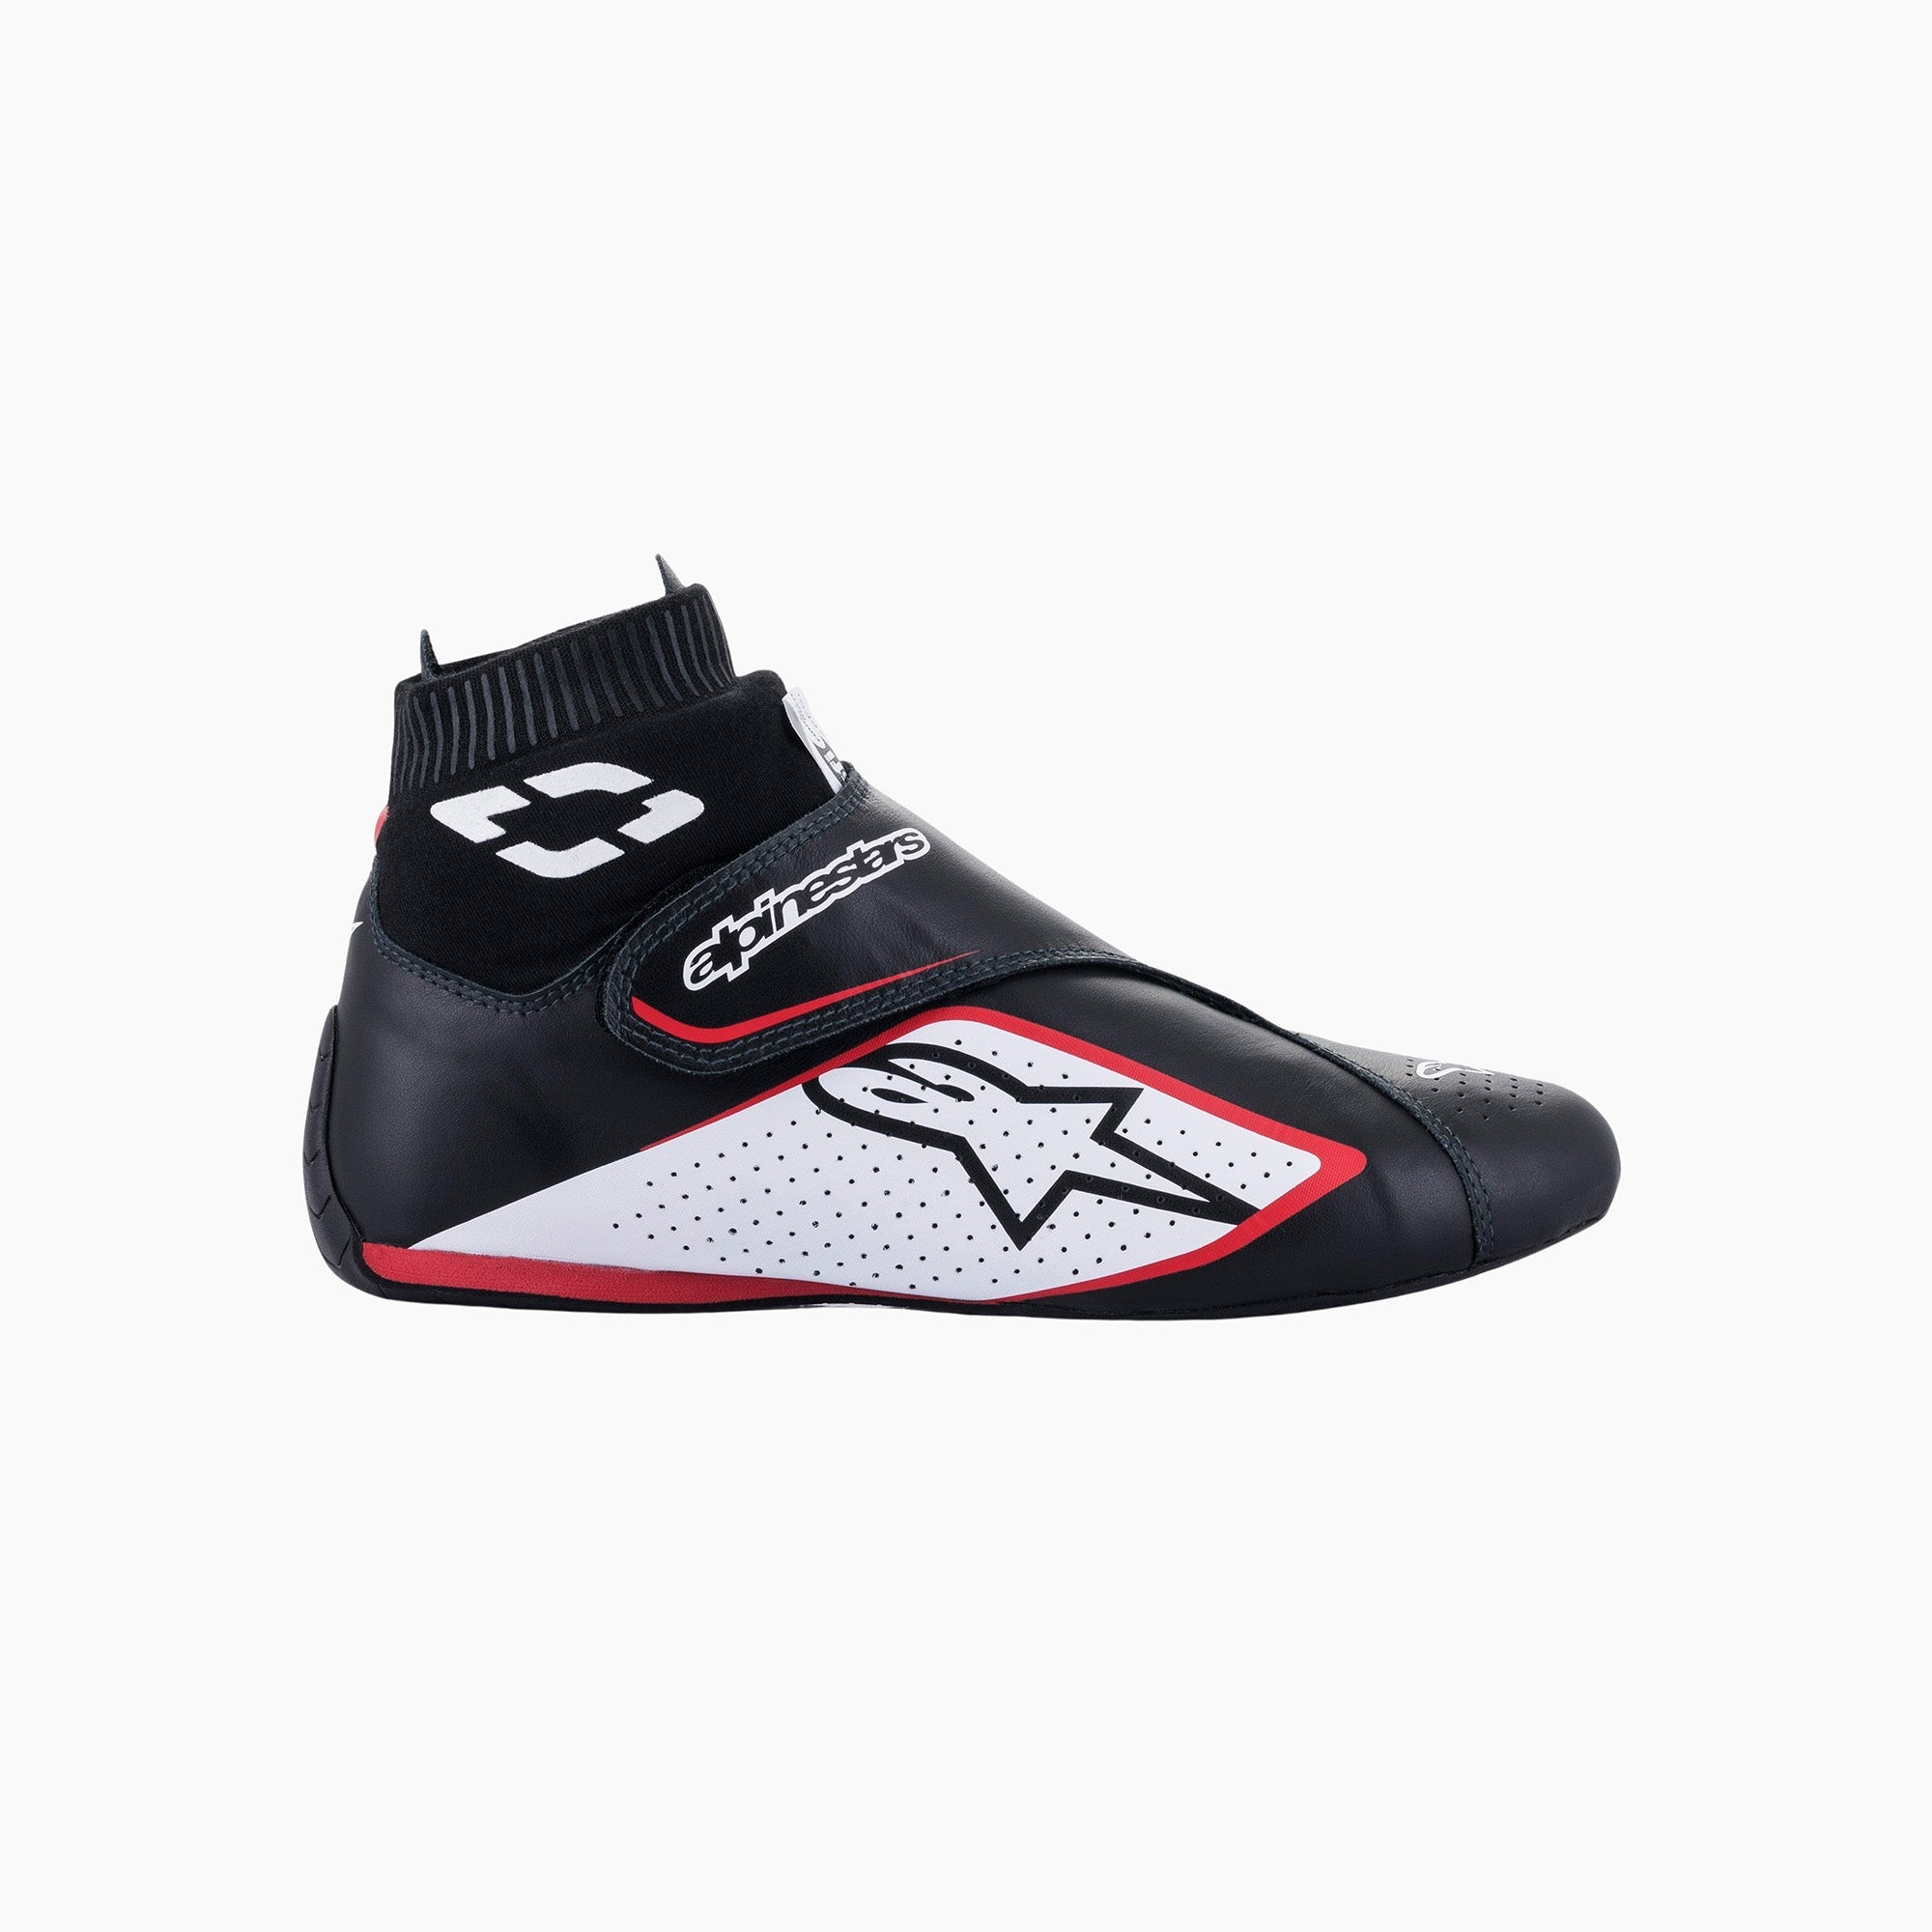 Alpinestars | Supermono V2 Racing Shoes-Racing Shoes-Alpinestars-gpx-store